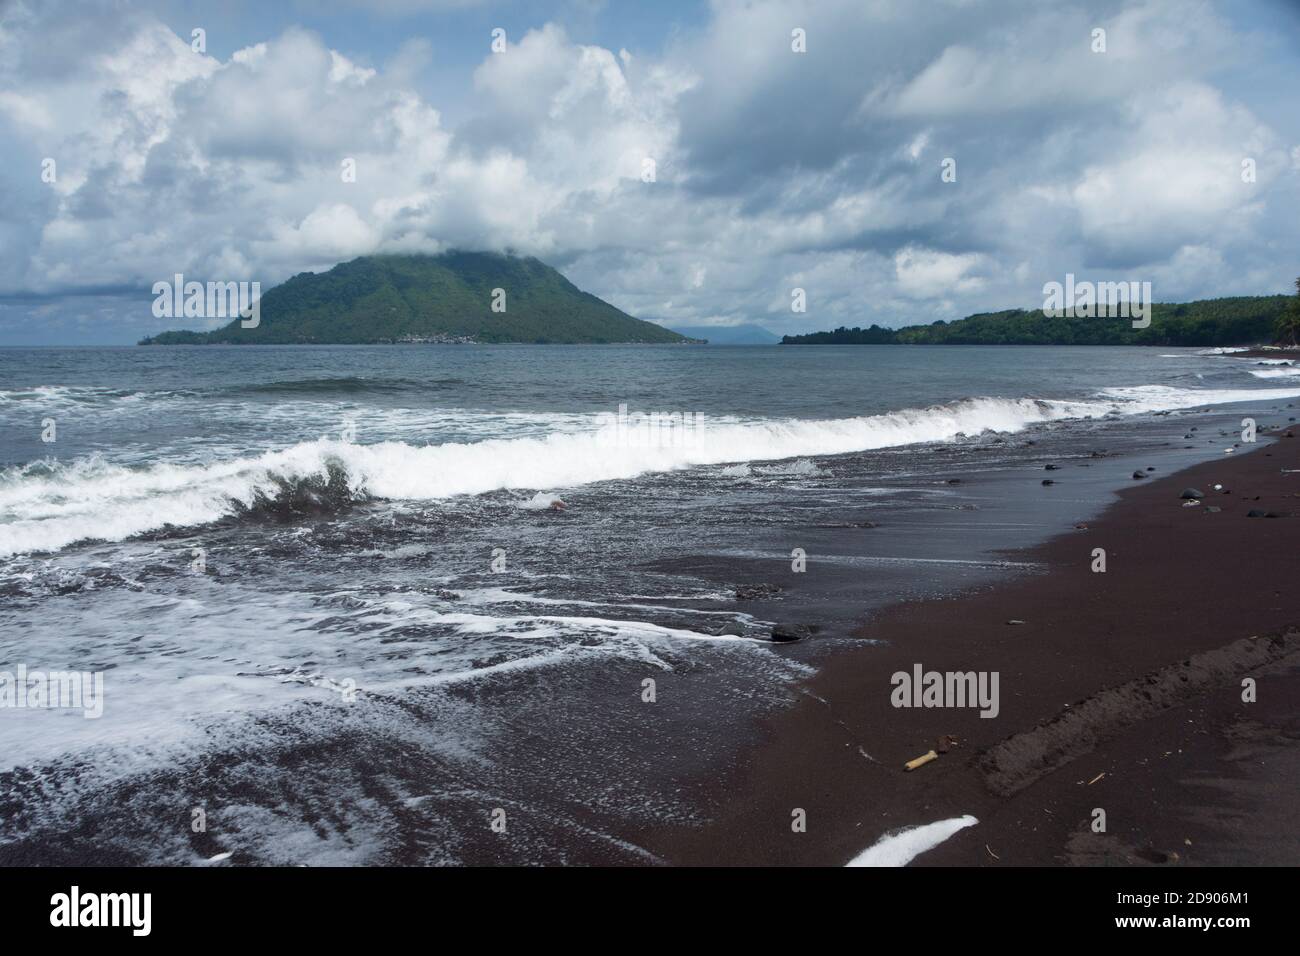 Mount Hiri (Insel) von Ternate Insel, Nord-Molukken, Indonesien. Stockfoto